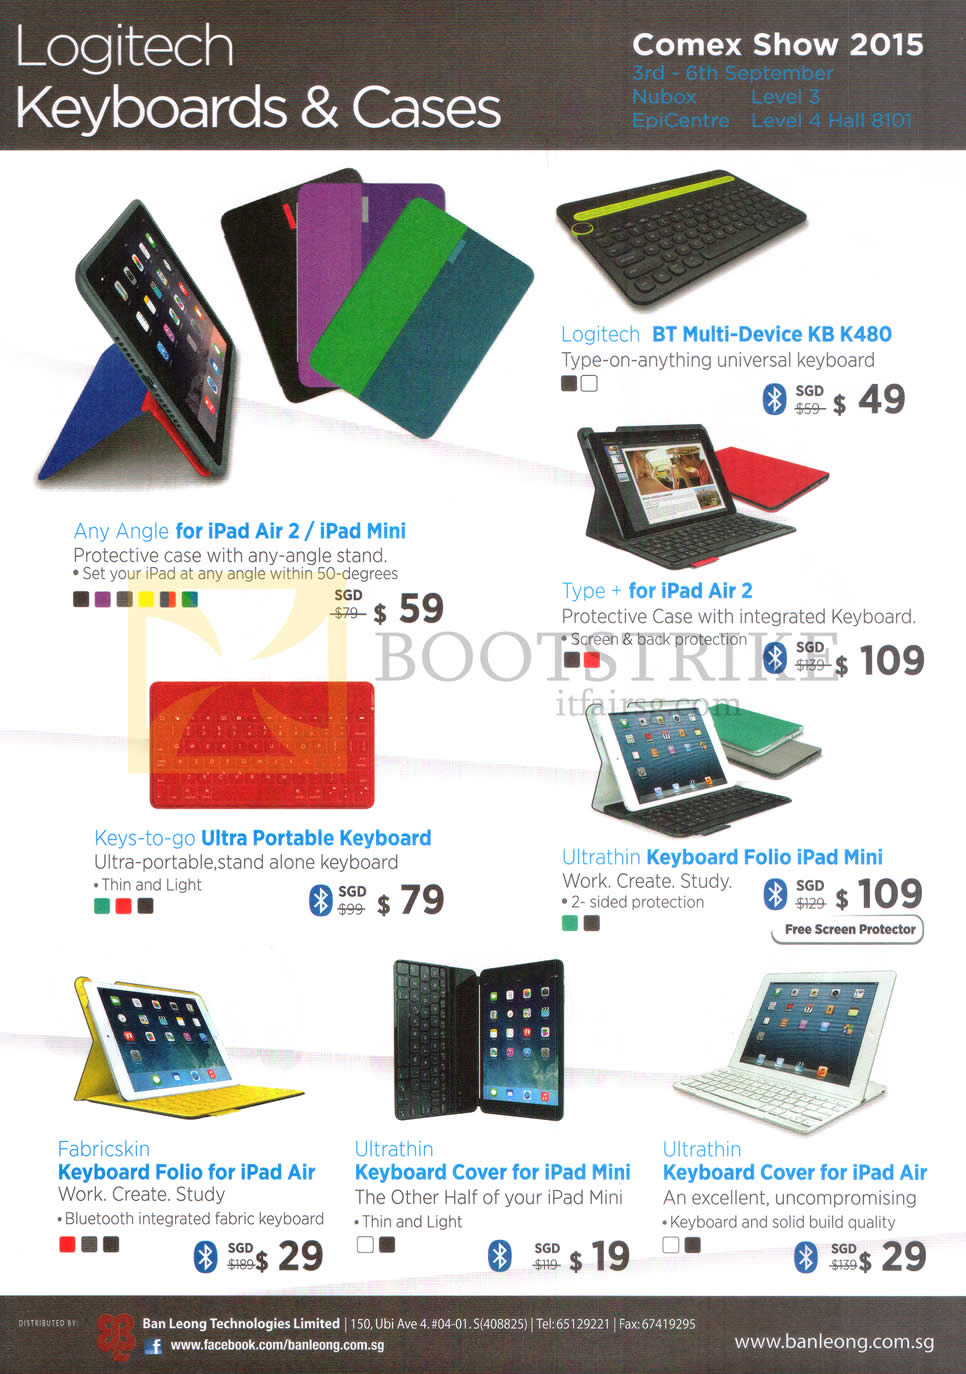 COMEX 2015 price list image brochure of Logitech Keyboards, Cases, Any Angle, Logitech BT KB K480, Type Plus, Keys-to-go, Ultrathin, FabricSkin